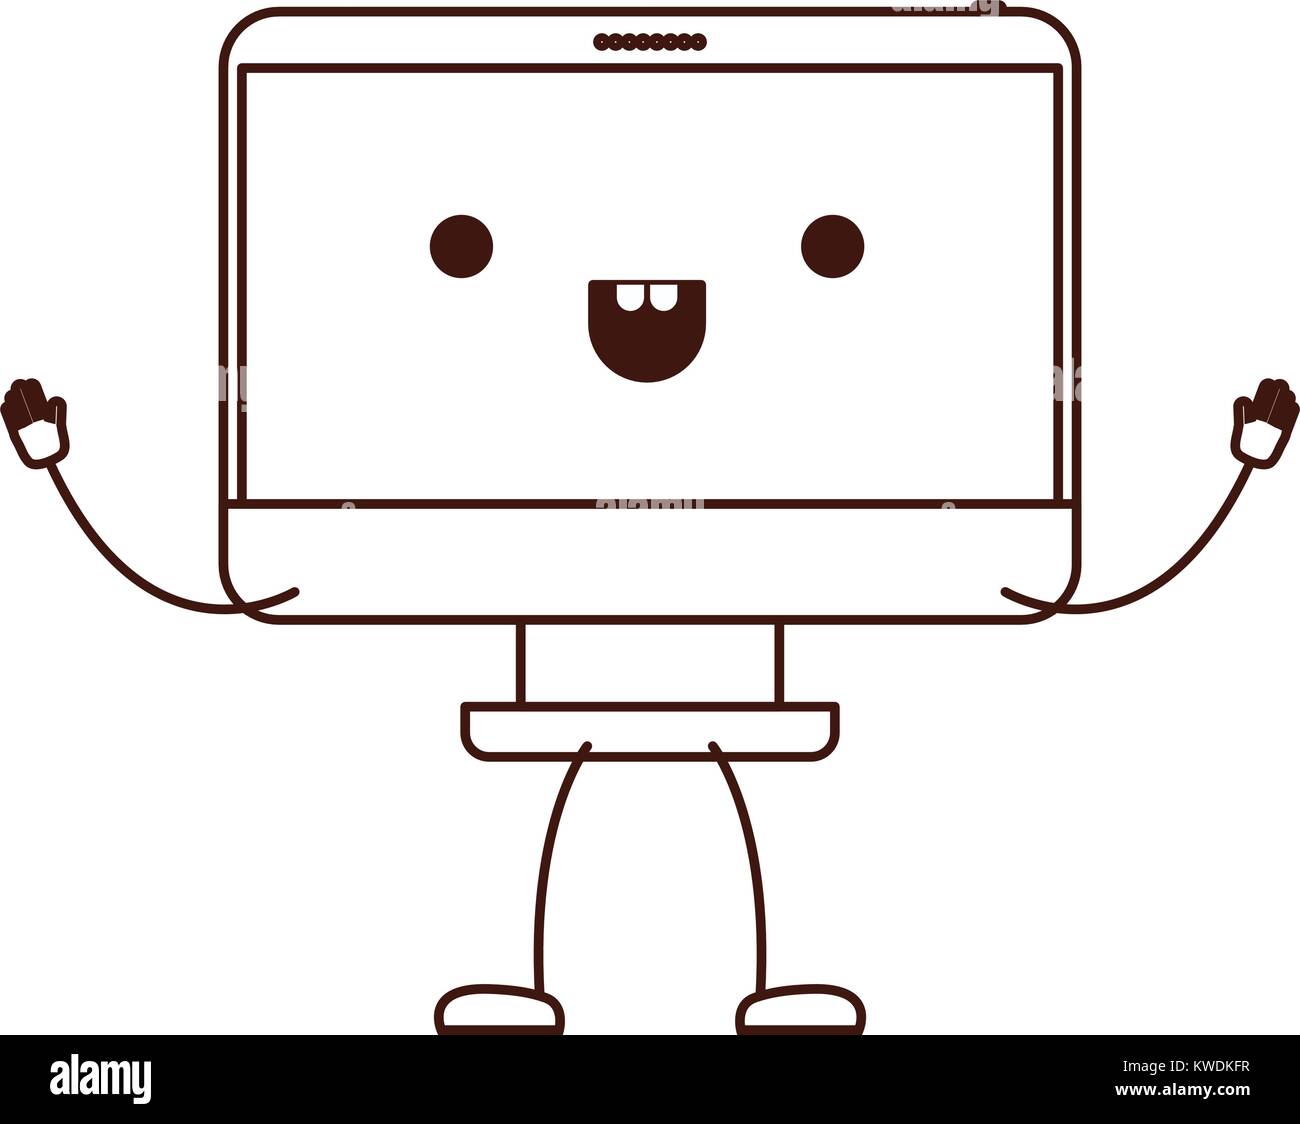 animated kawaii desktop computer in monochrome silhouette Stock Vector ...